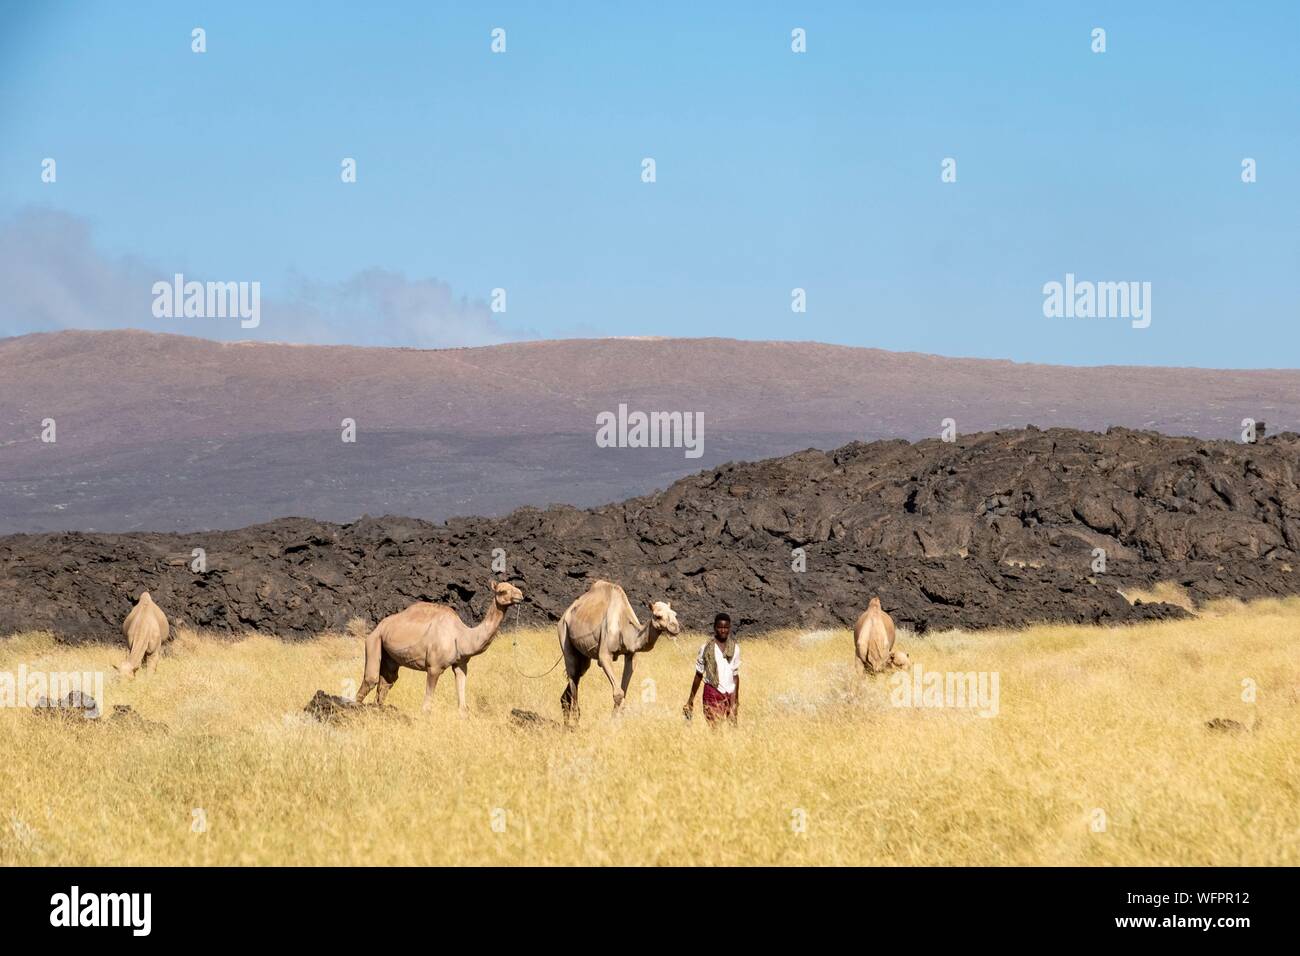 Ethiopia, Afar depression, Erta Ale volcano, camels Stock Photo